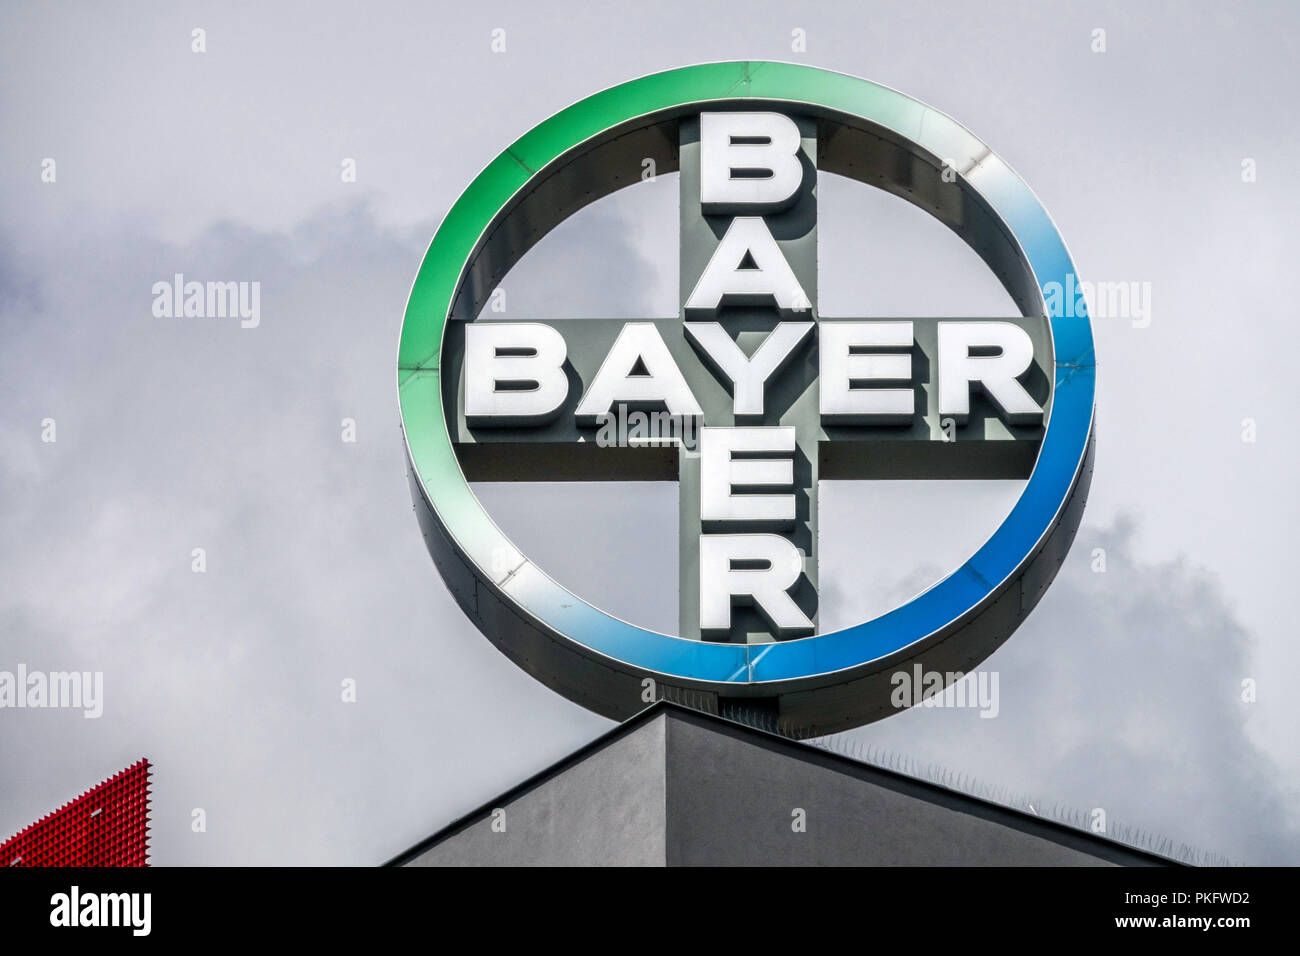 Bayer realiza una Opa hostil sobre Pfizer.